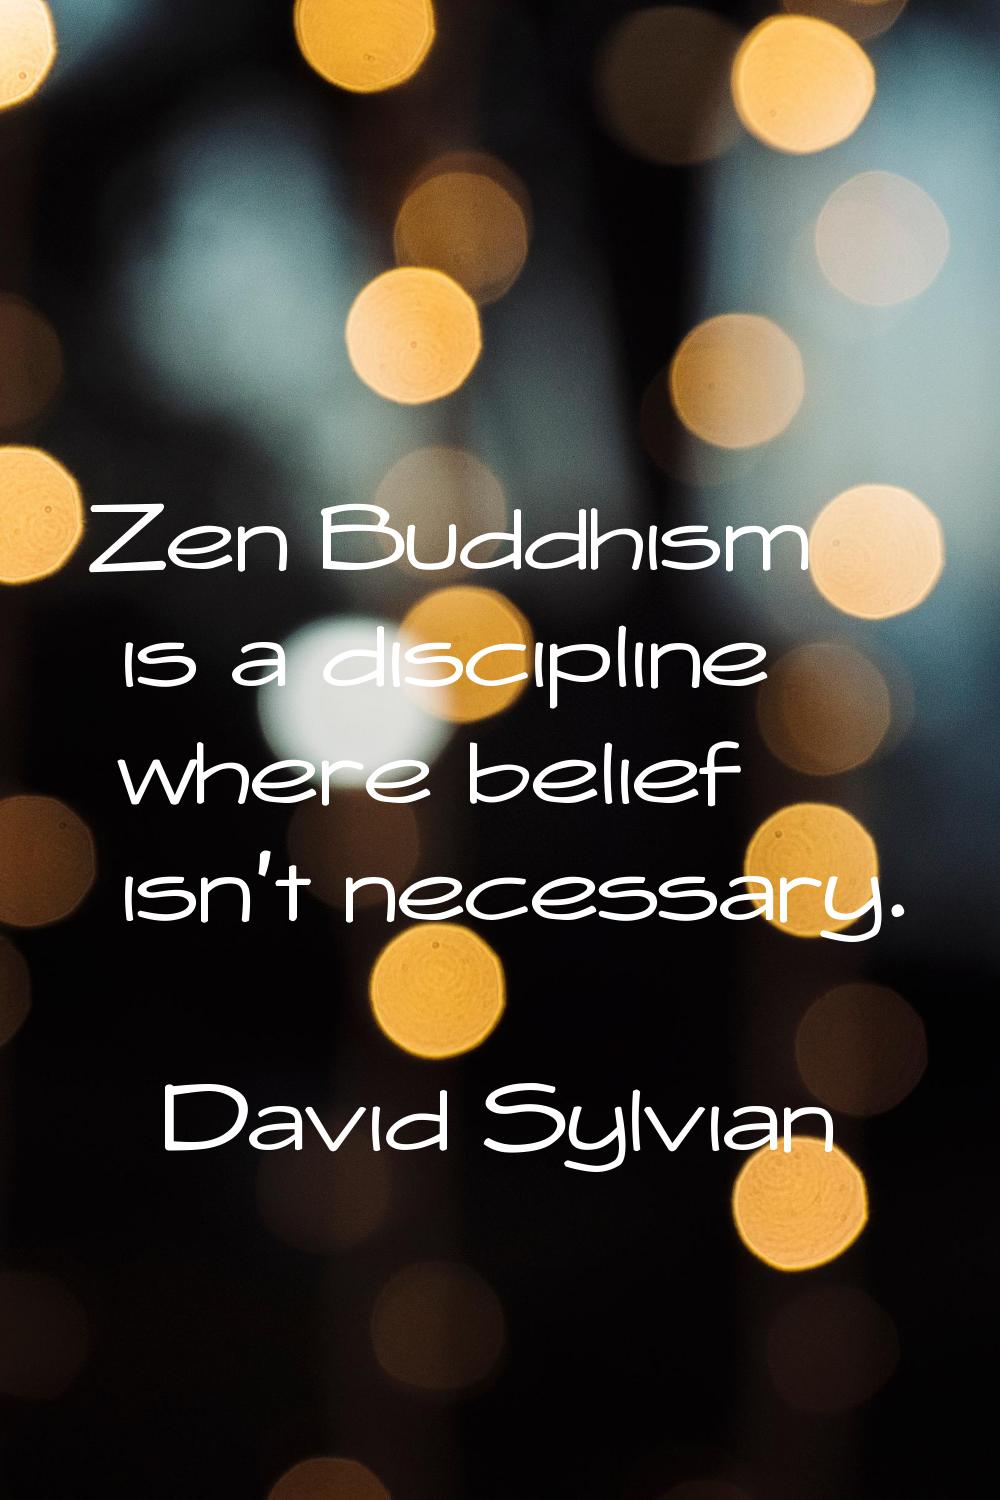 Zen Buddhism is a discipline where belief isn't necessary.